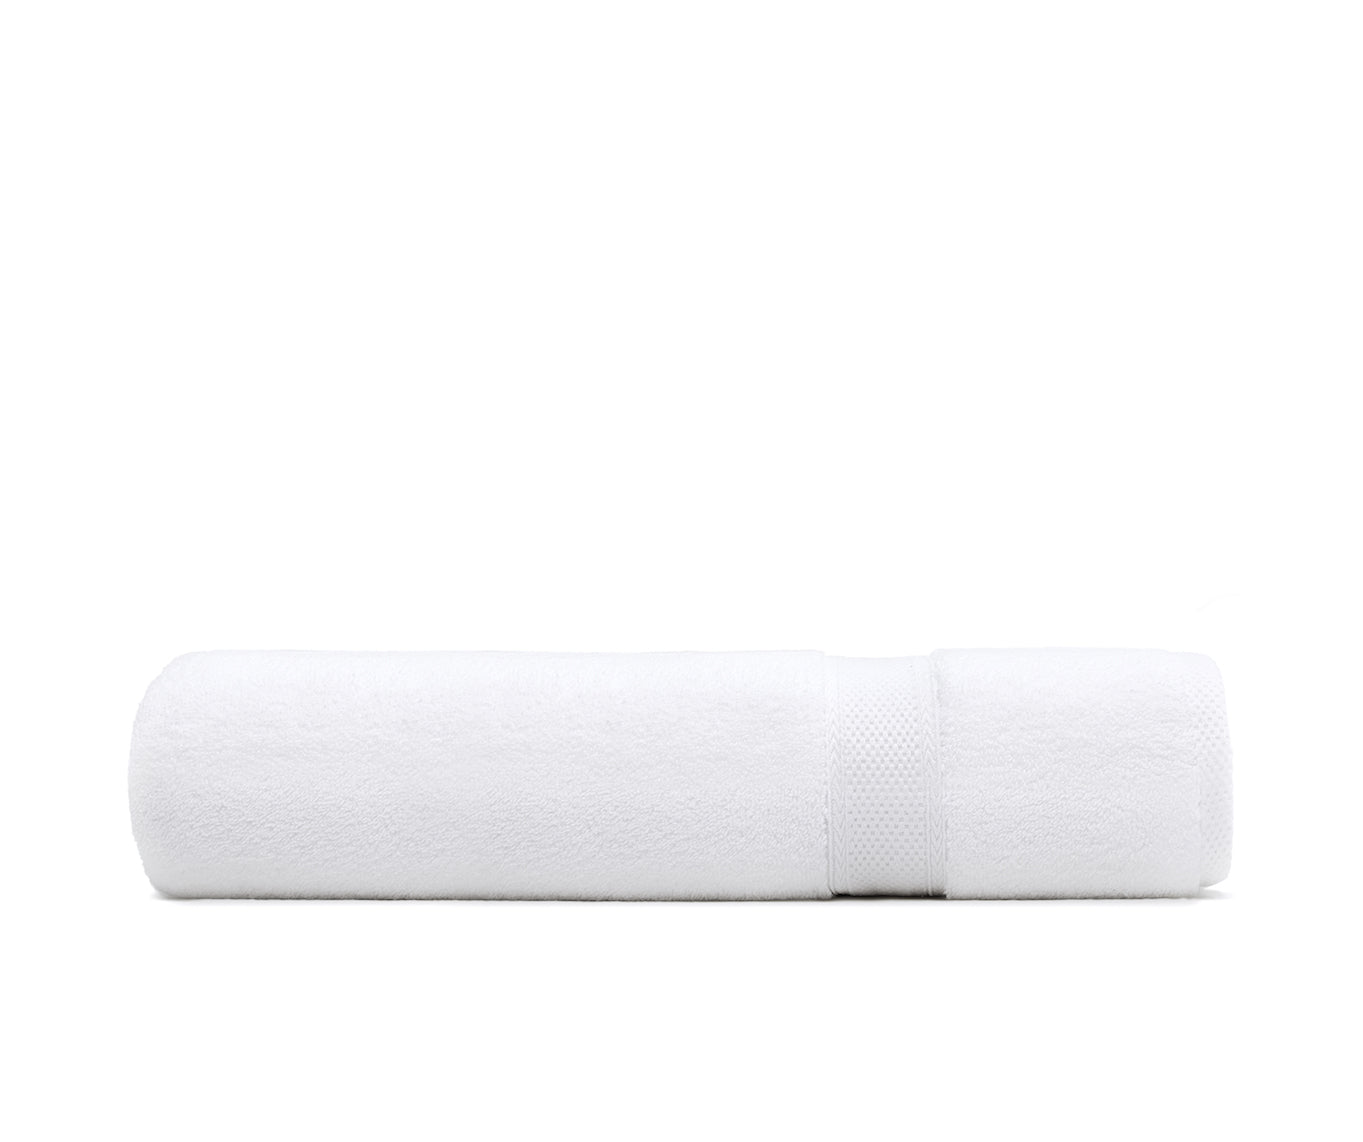 Standard Textile - Plush Towels (Lynova), Natural, Washcloth - Set of 4